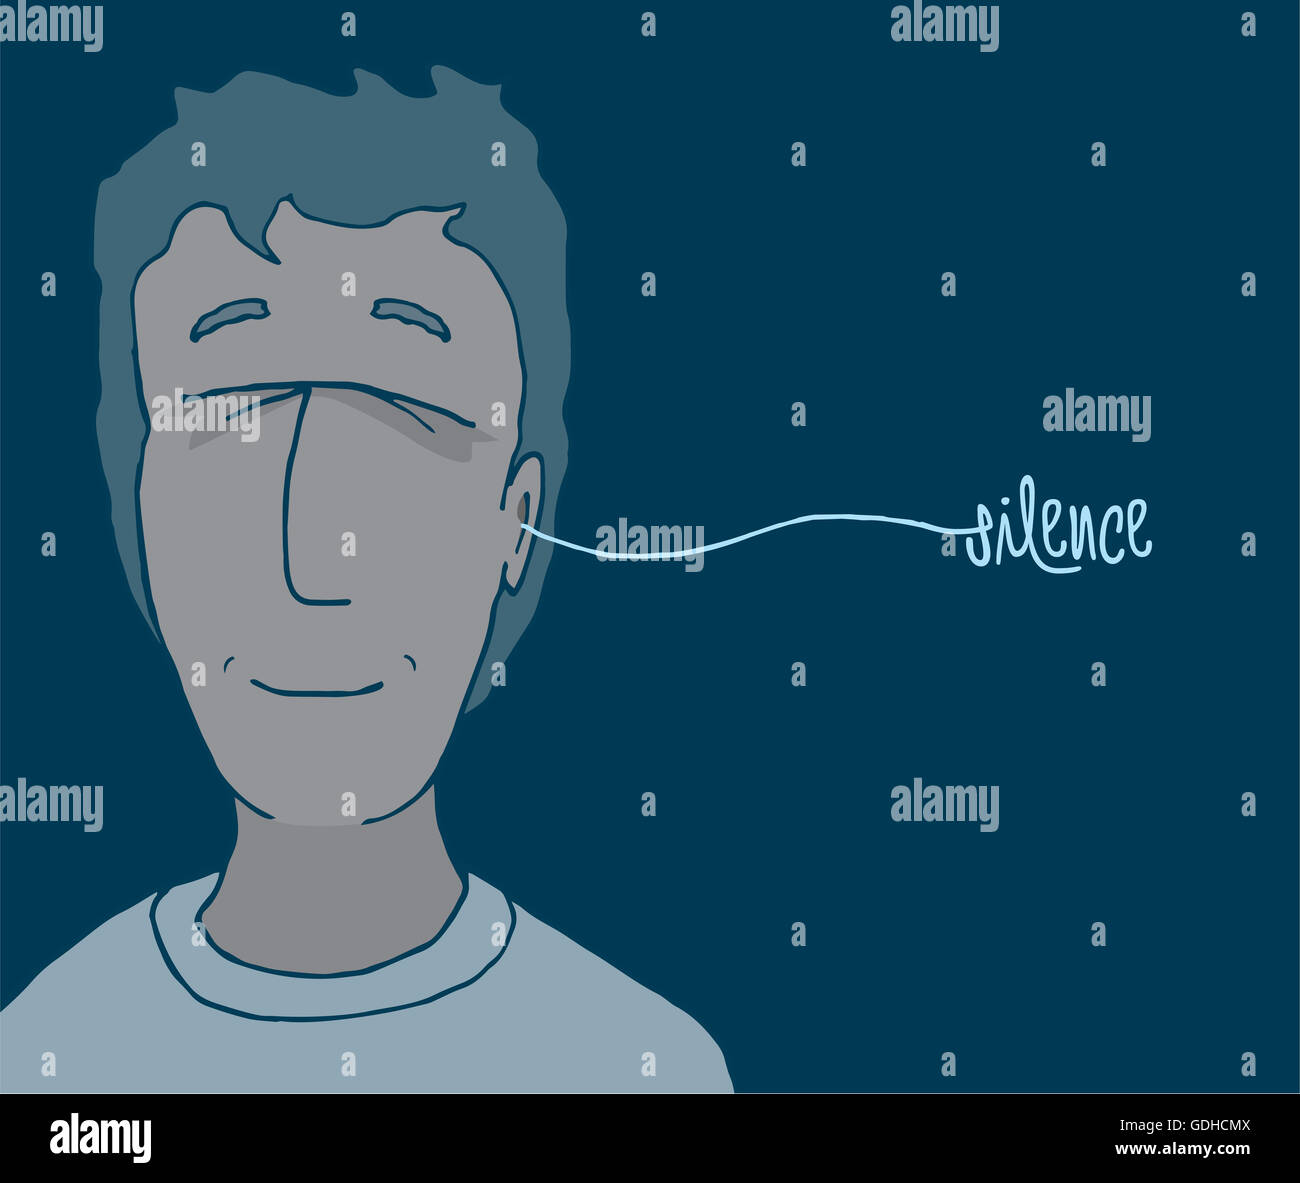 Cartoon illustration of man with his eyes closed meditating on silence Stock Photo